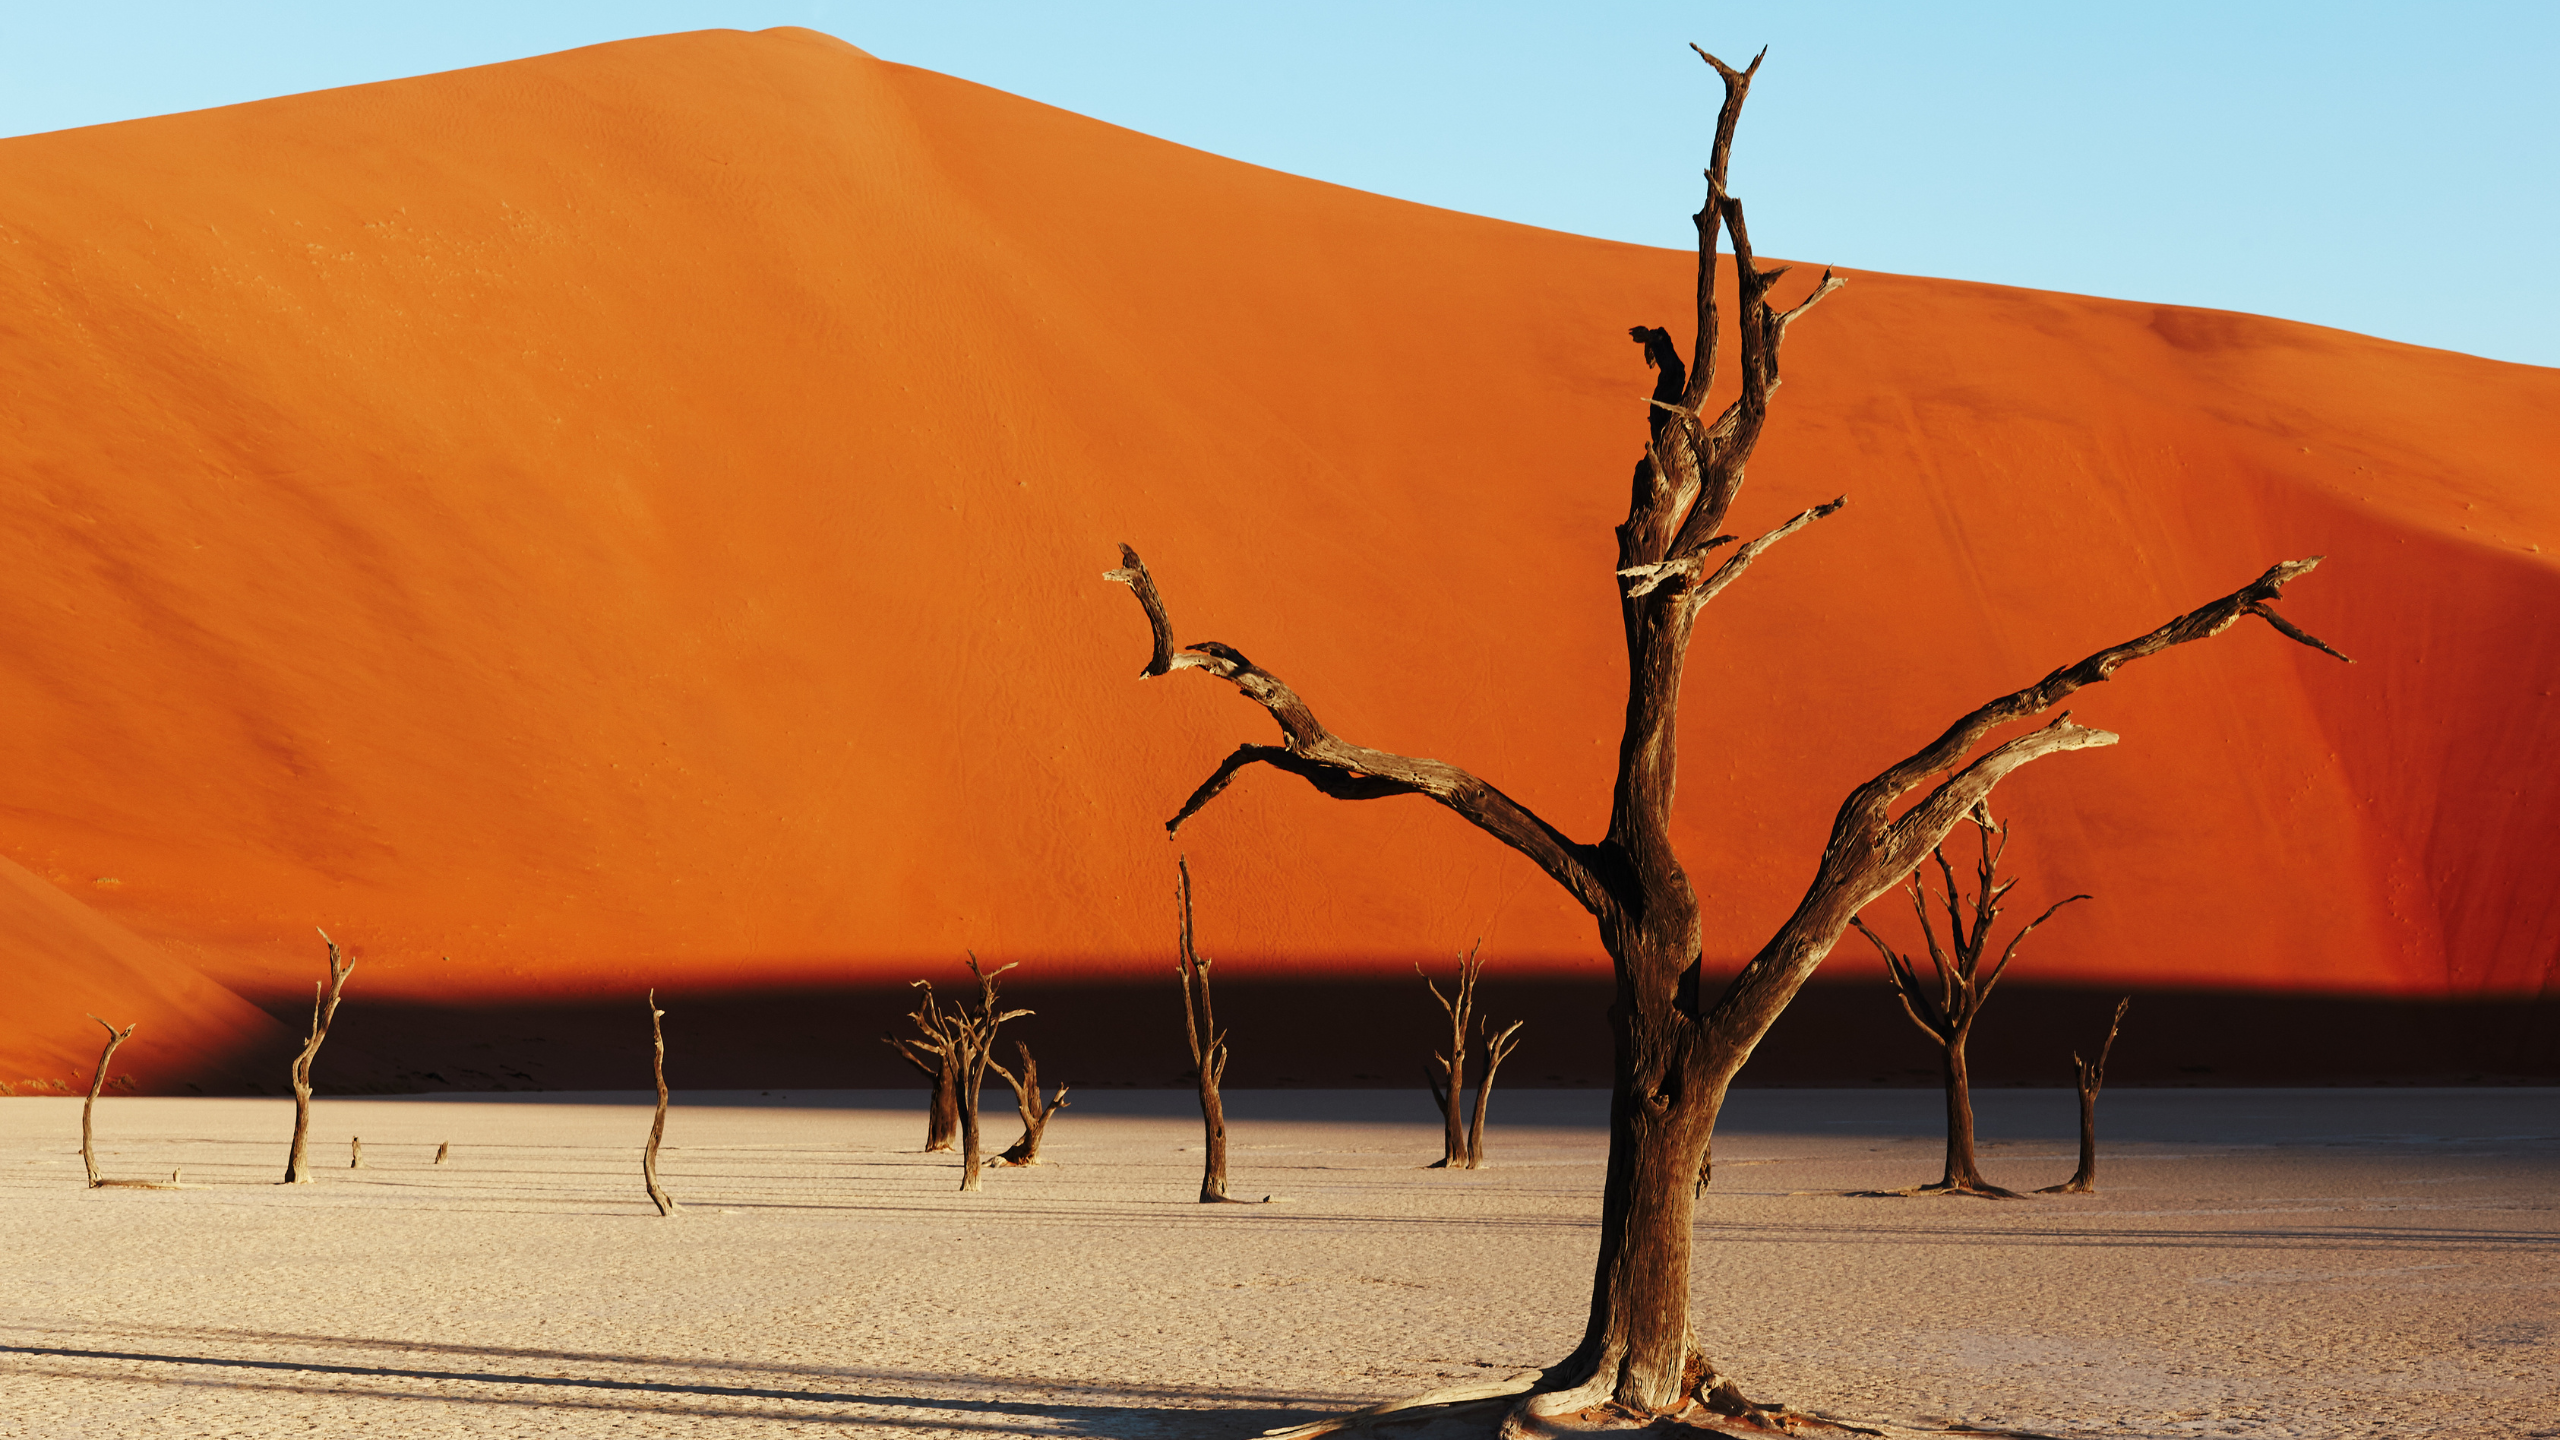 Namib Desert in Namibia, Africa is the oldest desert in the world